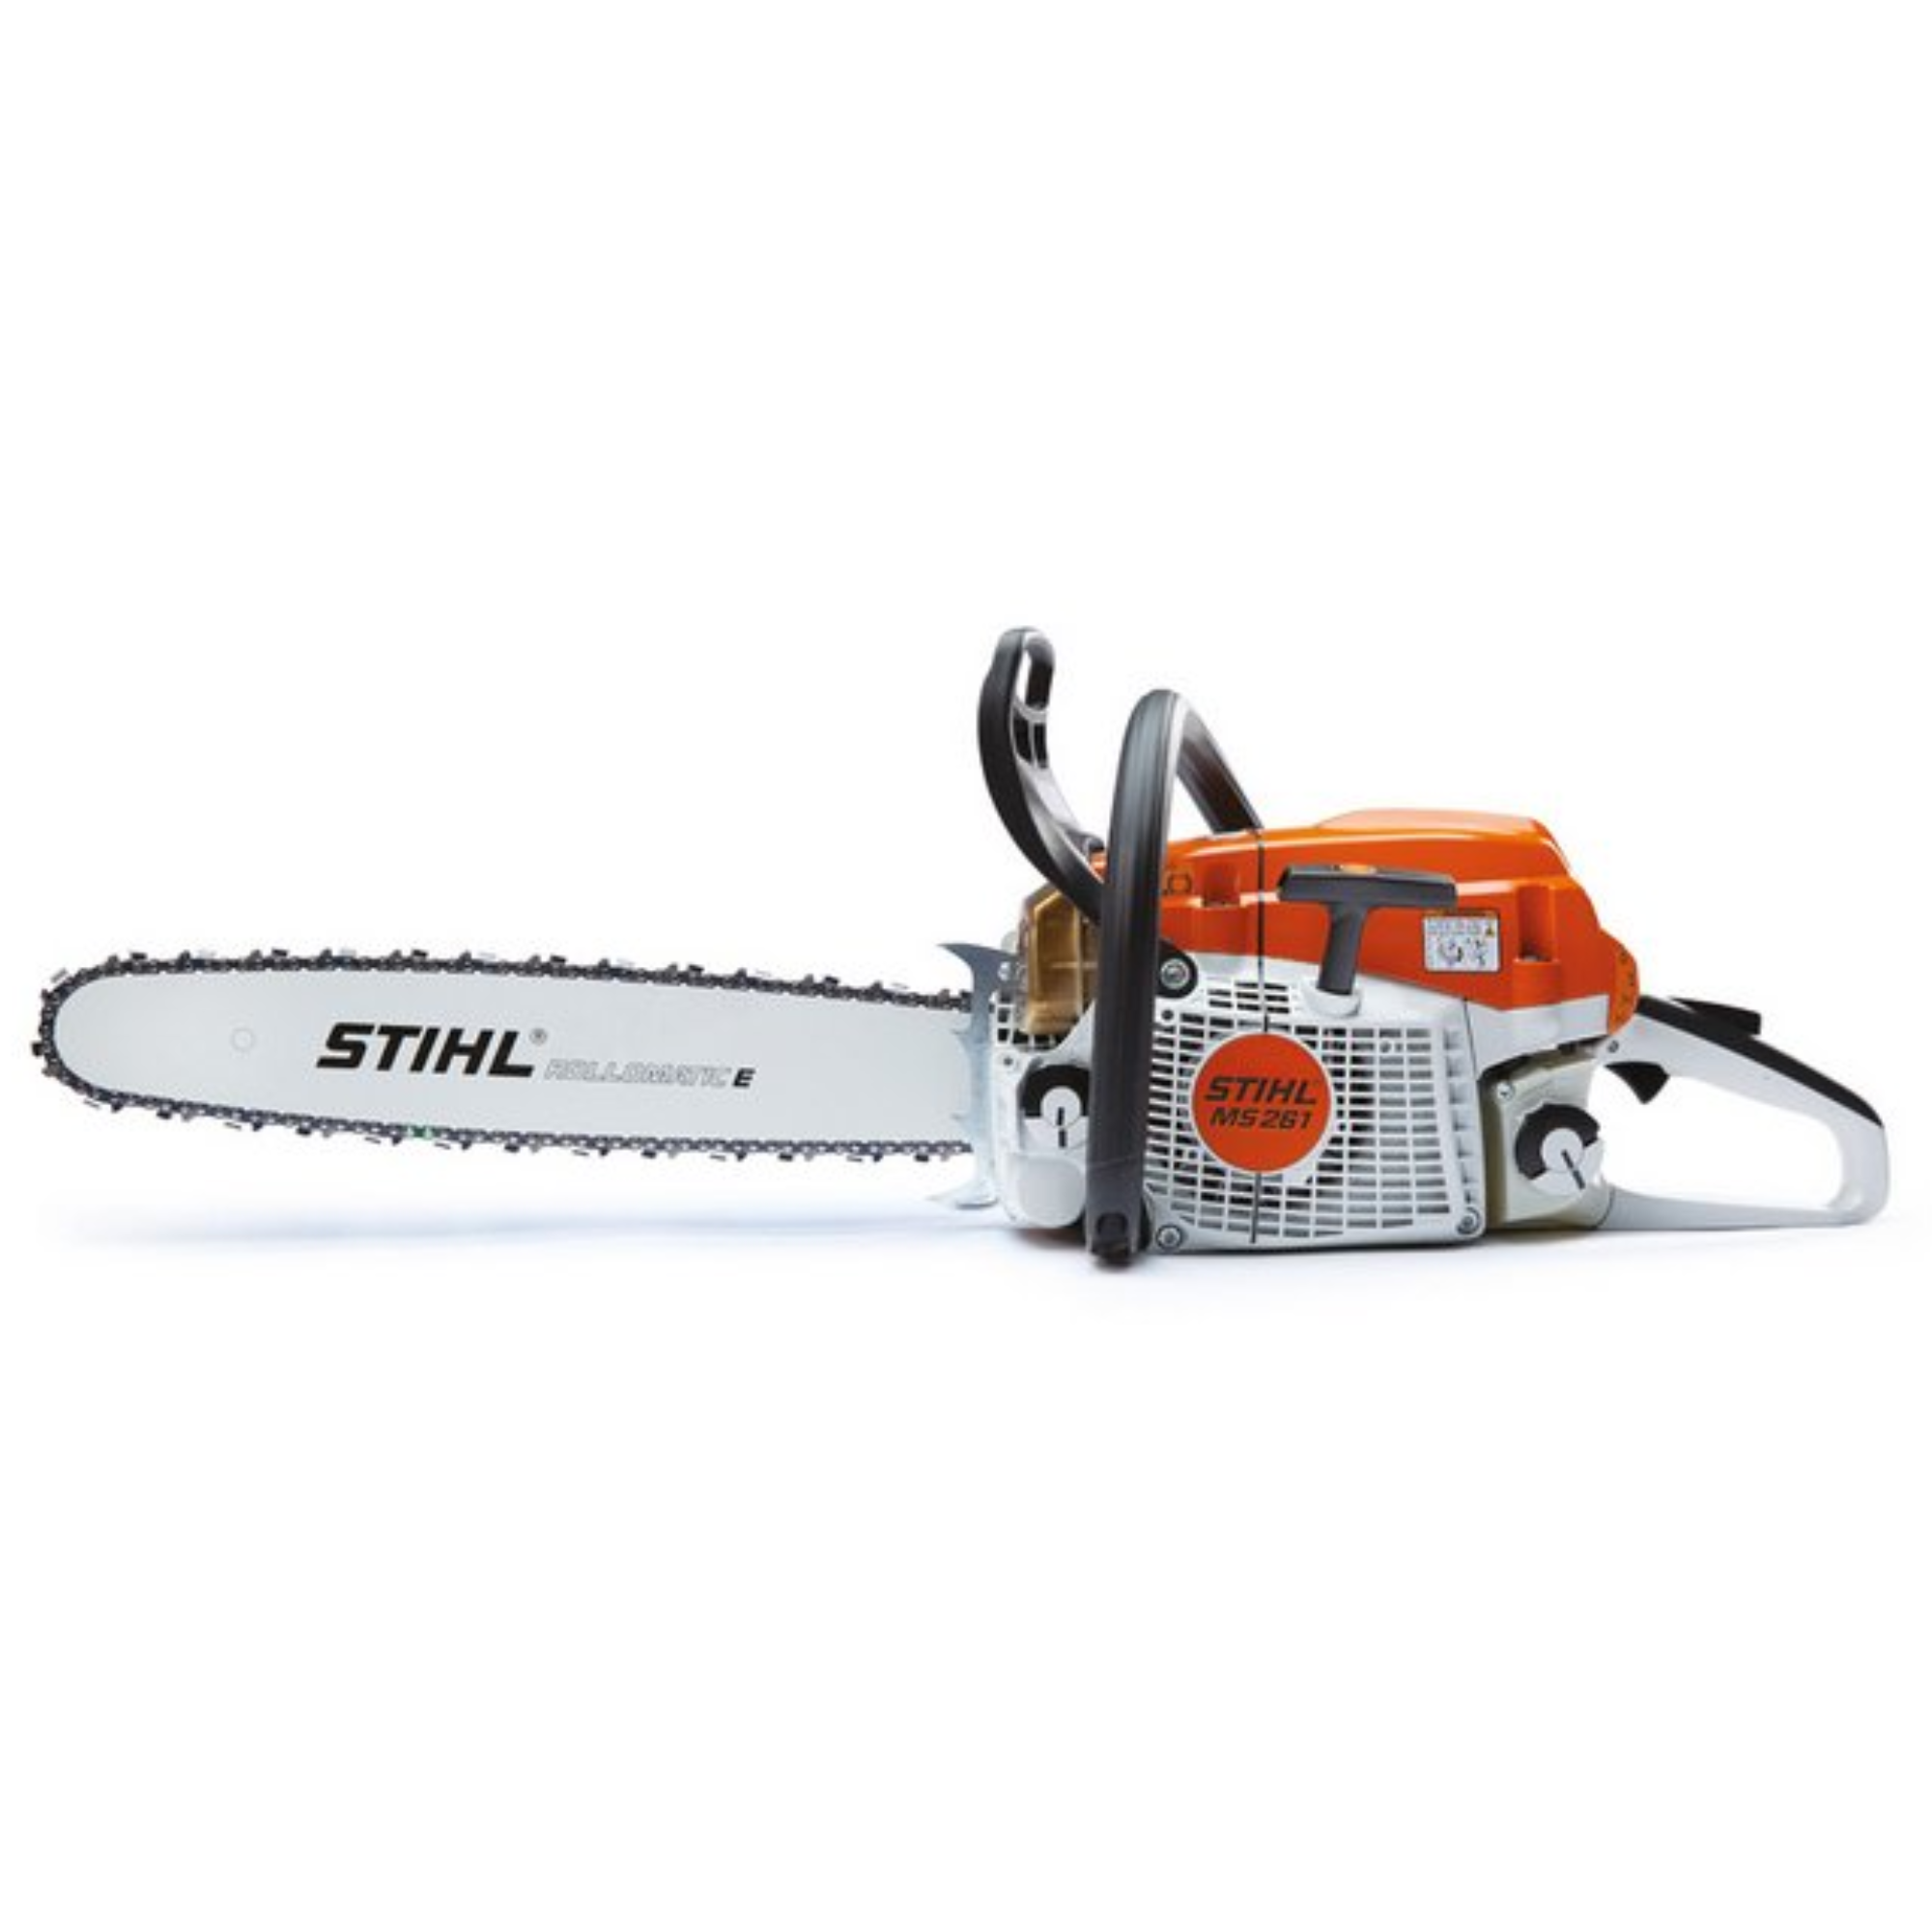 Stihl MS 261 Gas Powered Chainsaw